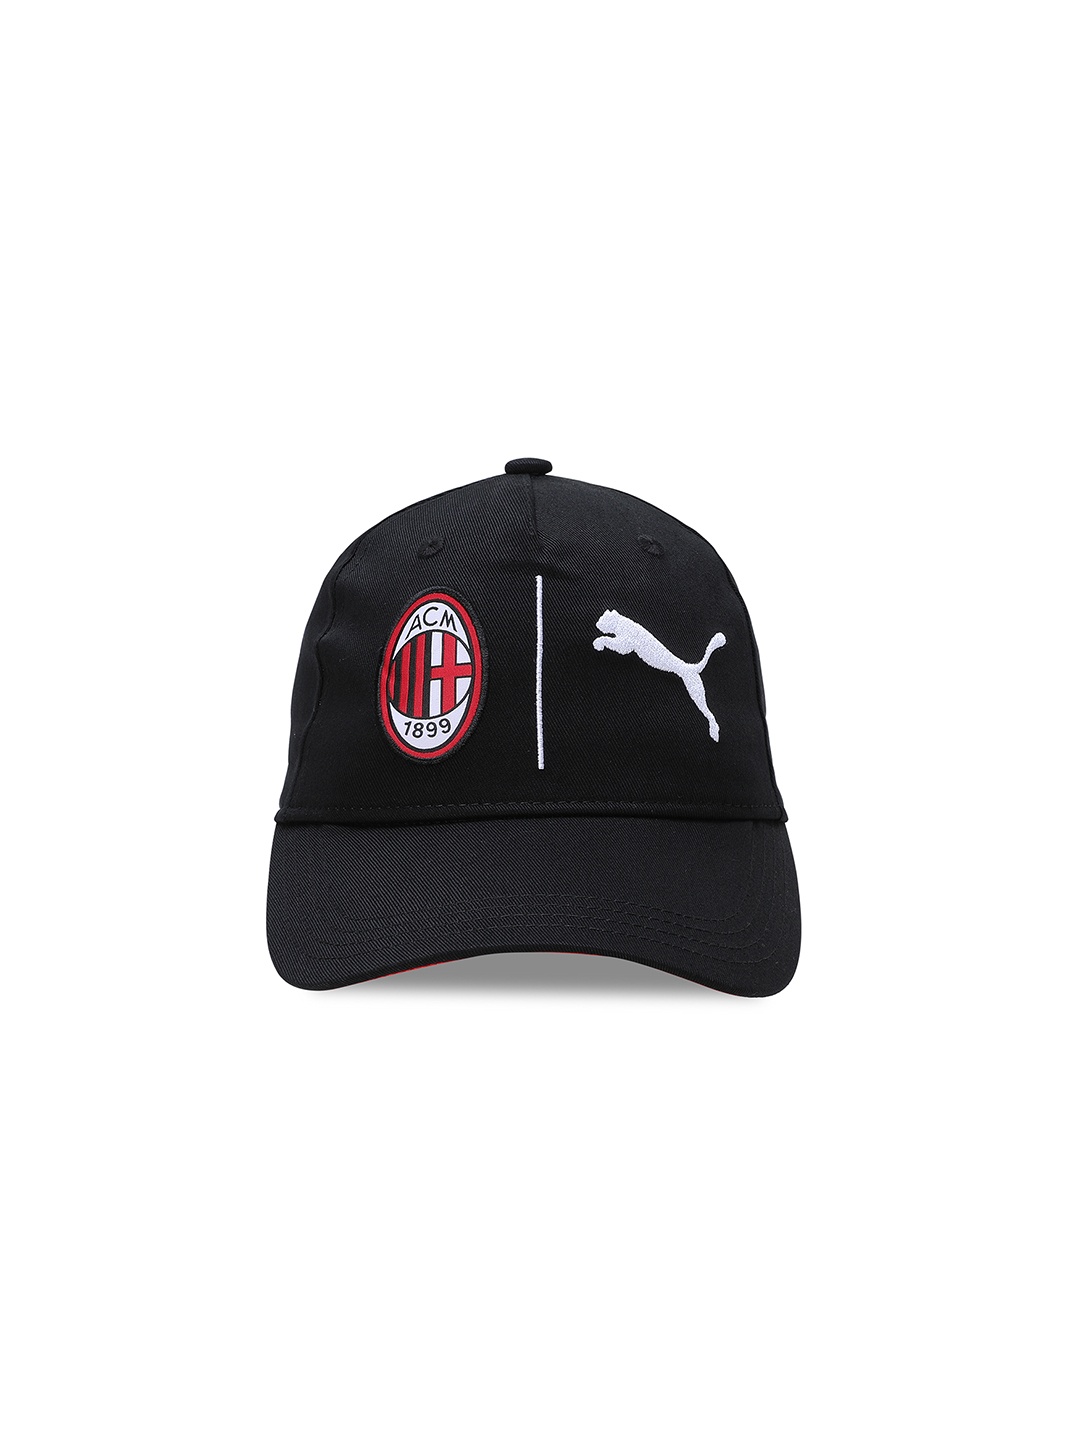 

Puma Unisex Cotton Brand Logo Embroidered AC Milan Football Cap, Black